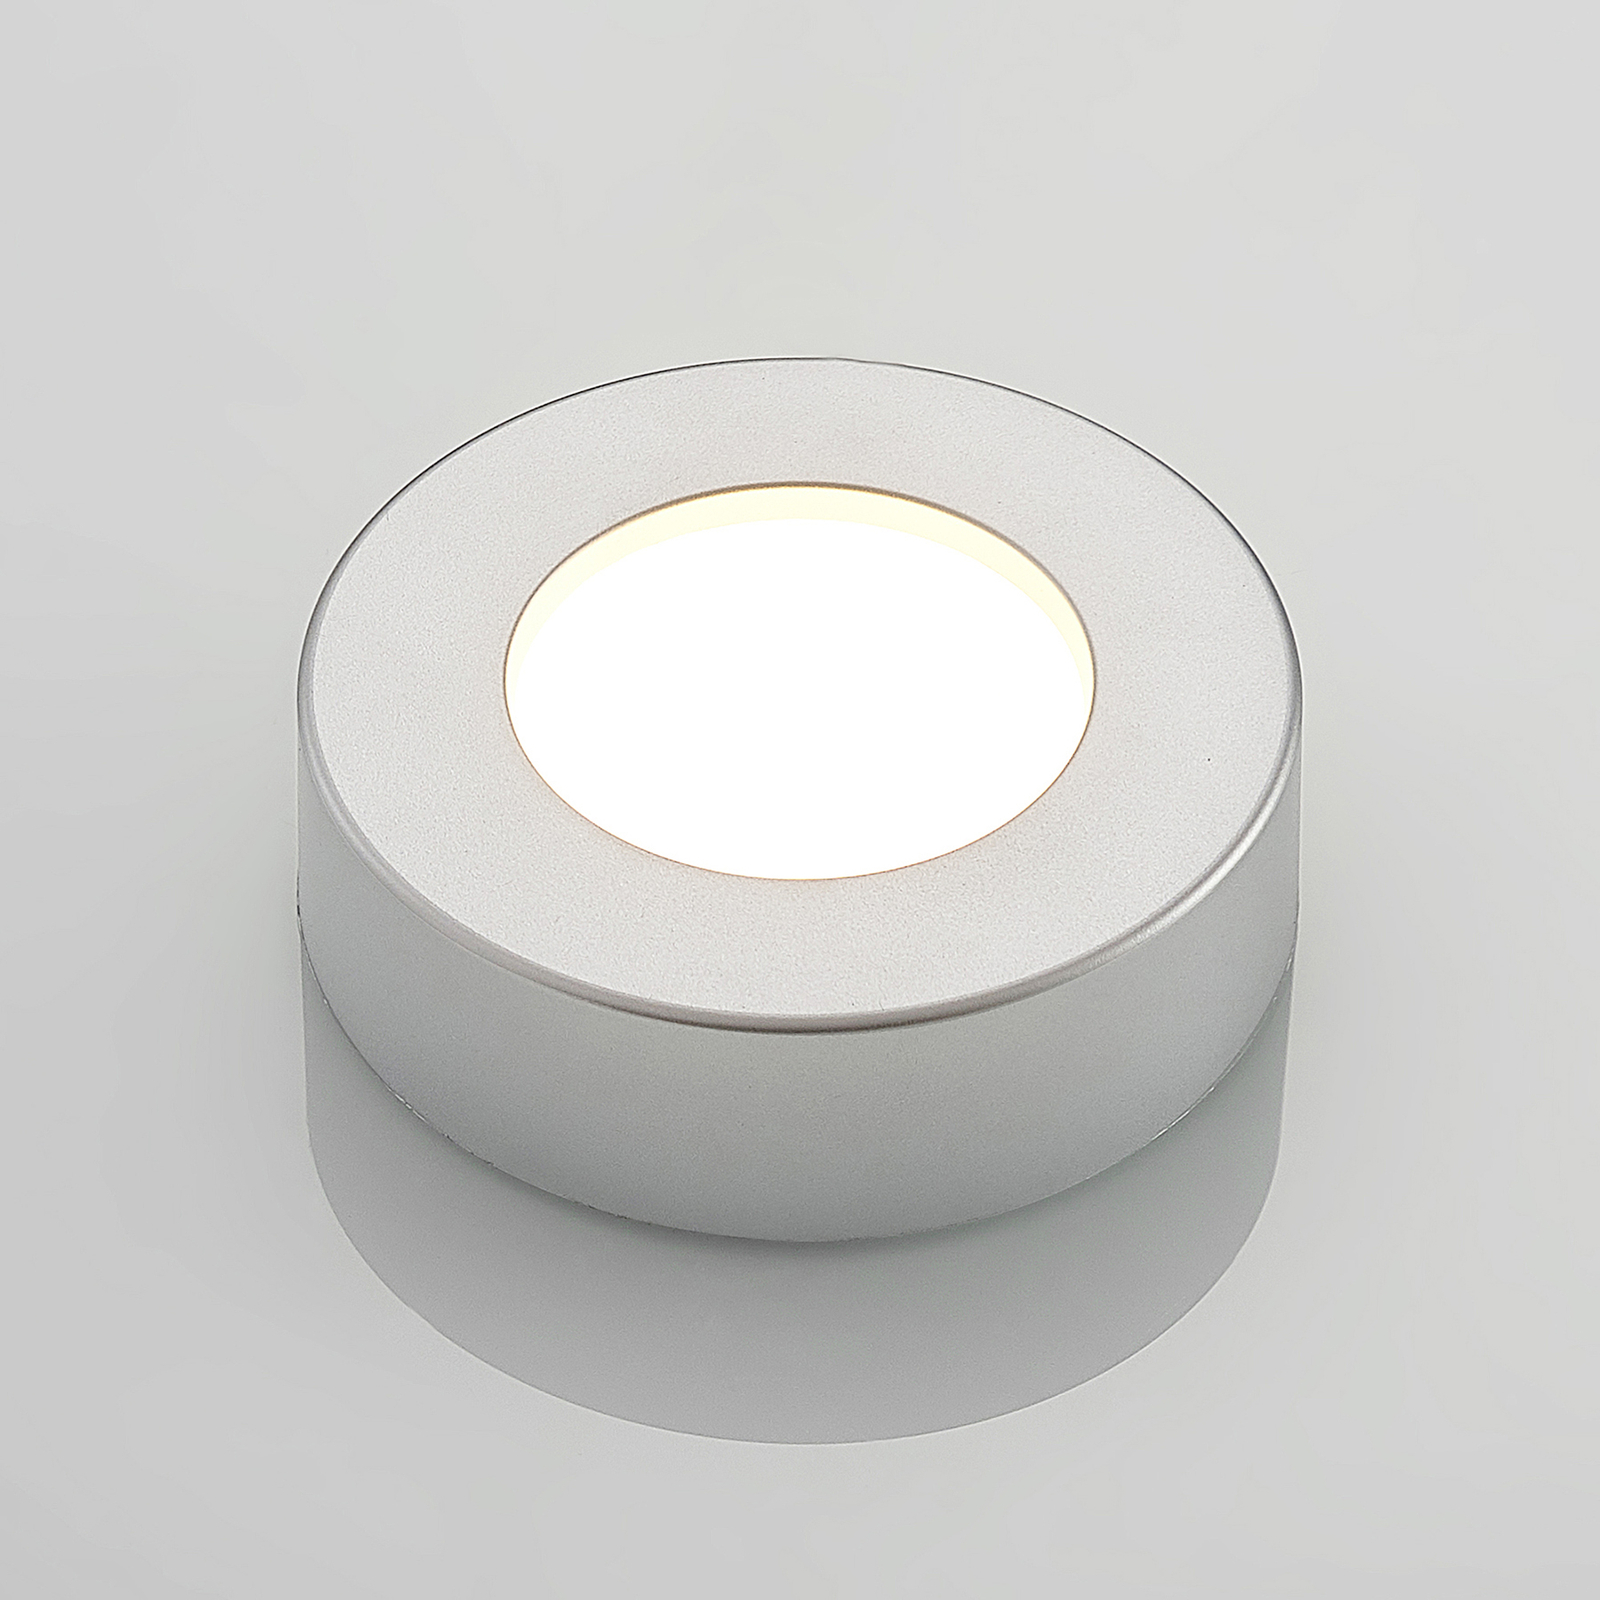 Prios Edwina LED stropna svetilka, srebrna, 12,2 cm, 10 kosov